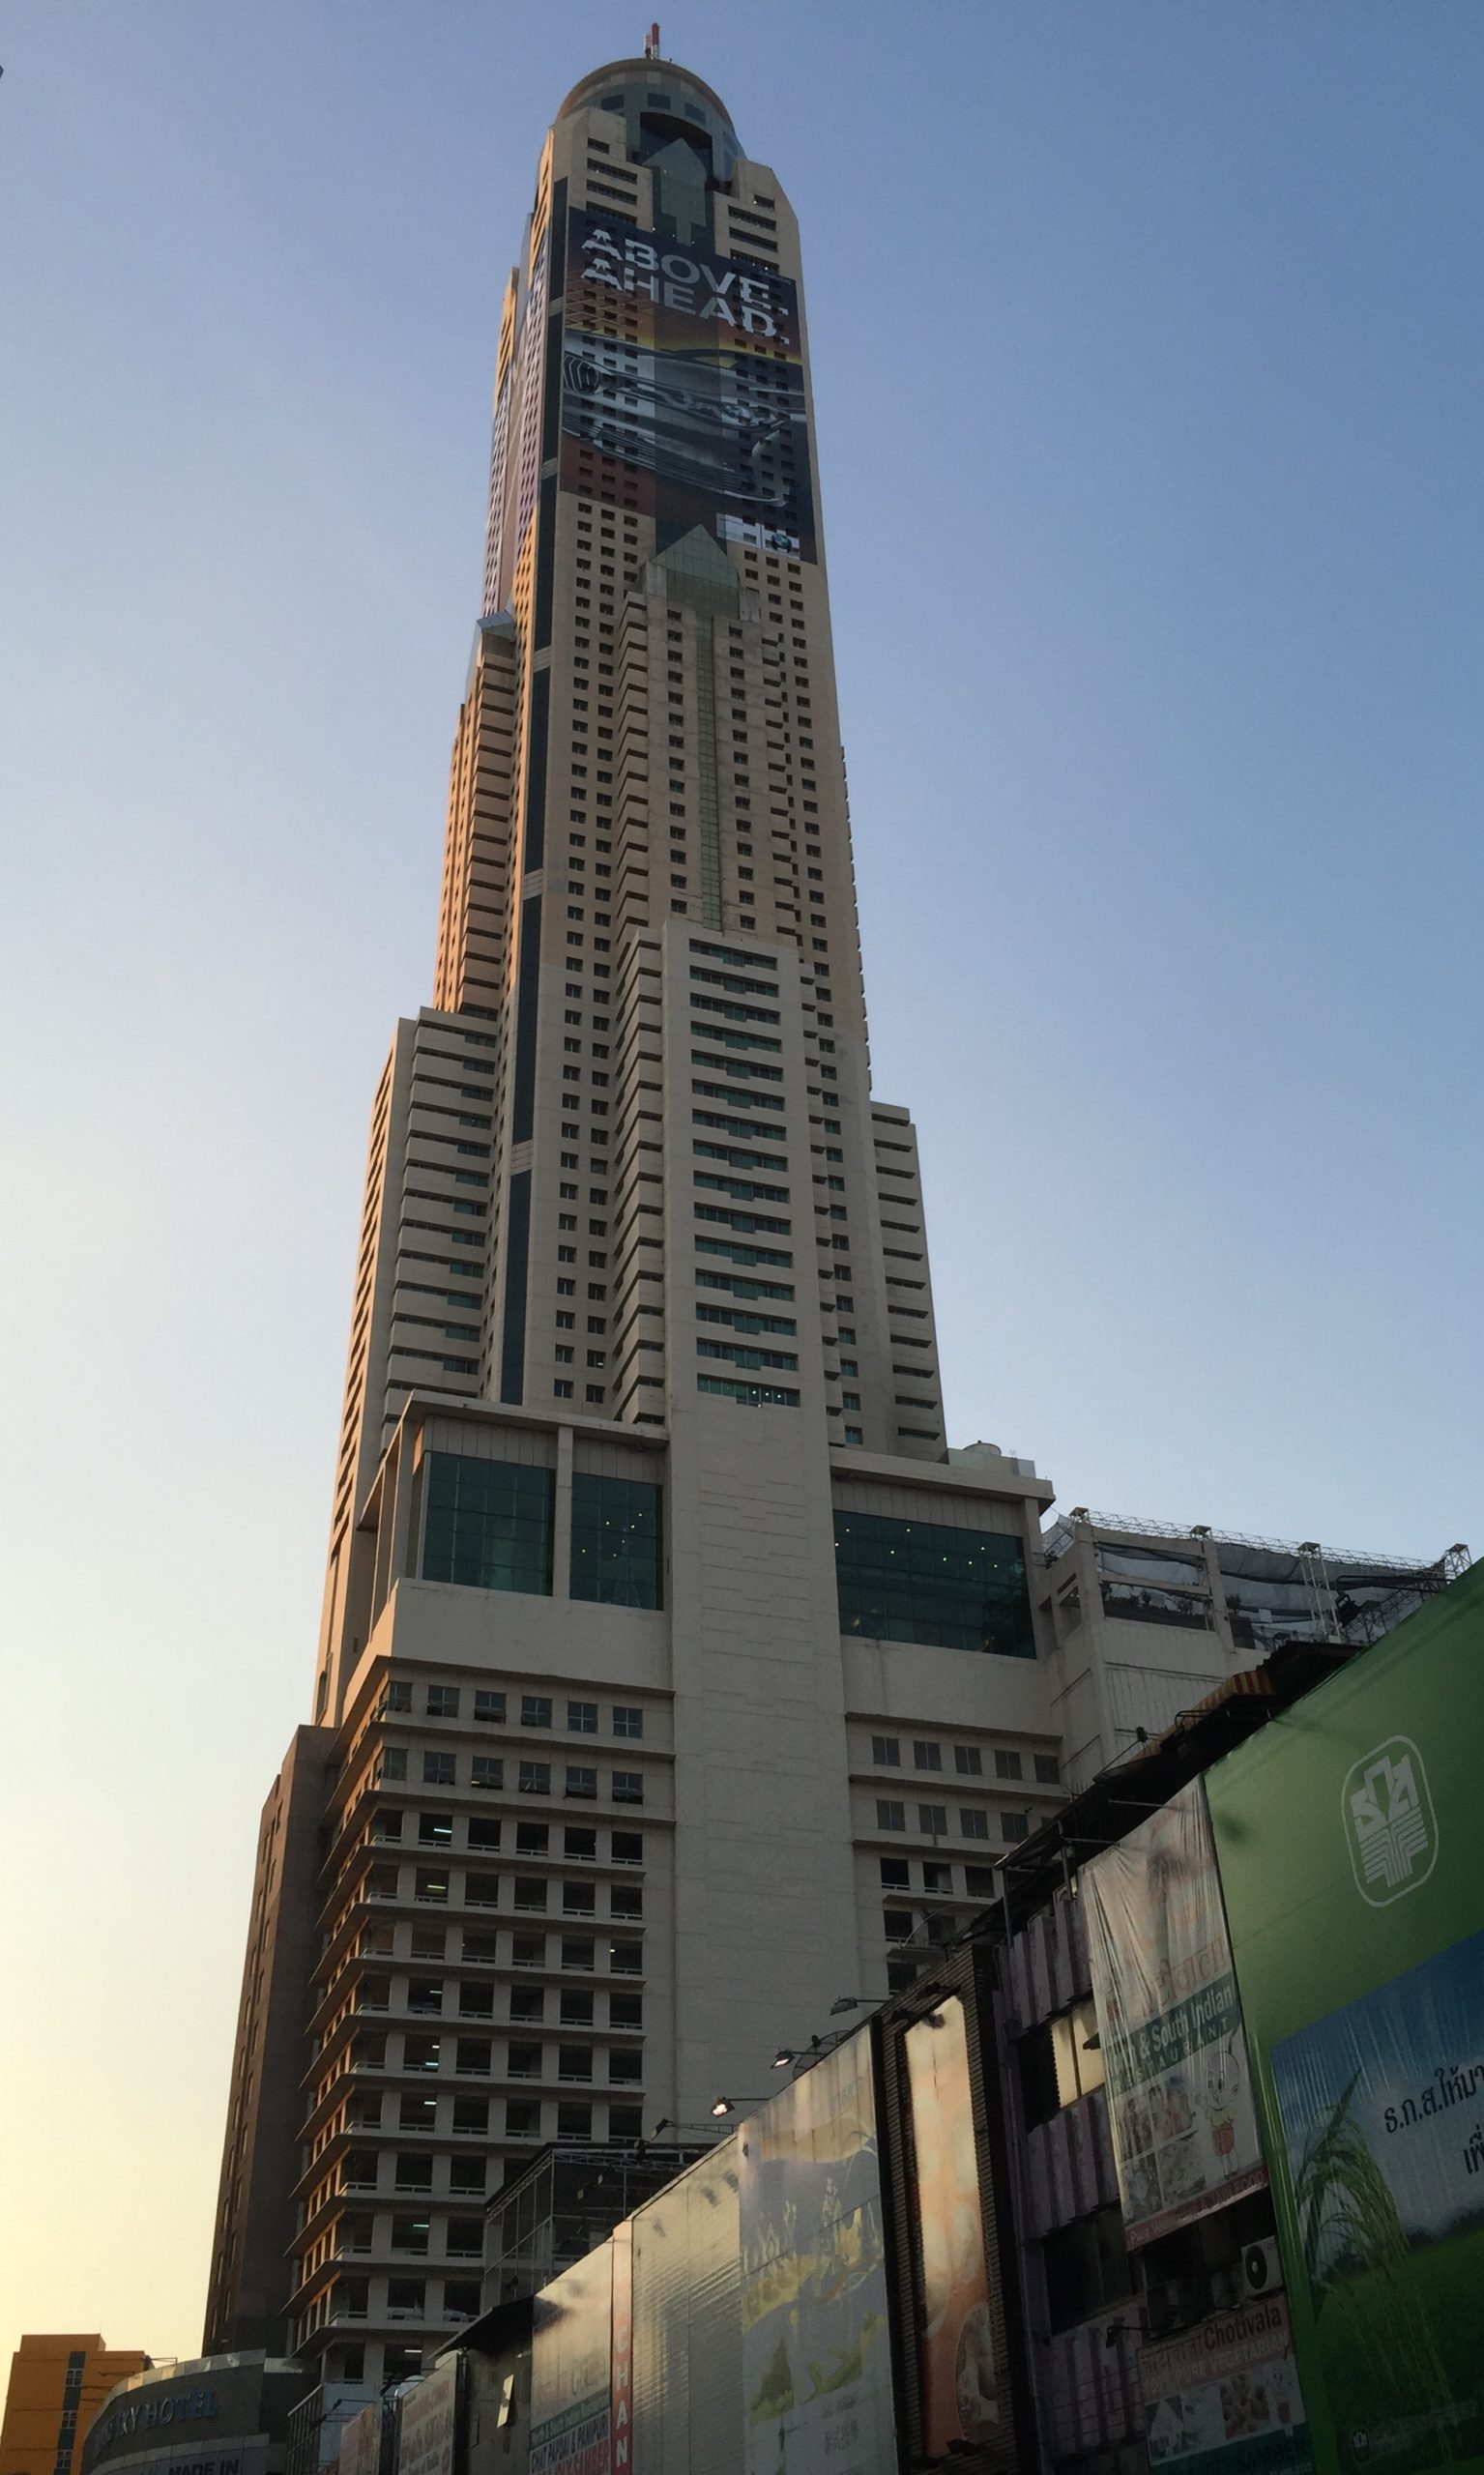 The Baiyoke Sky Tower